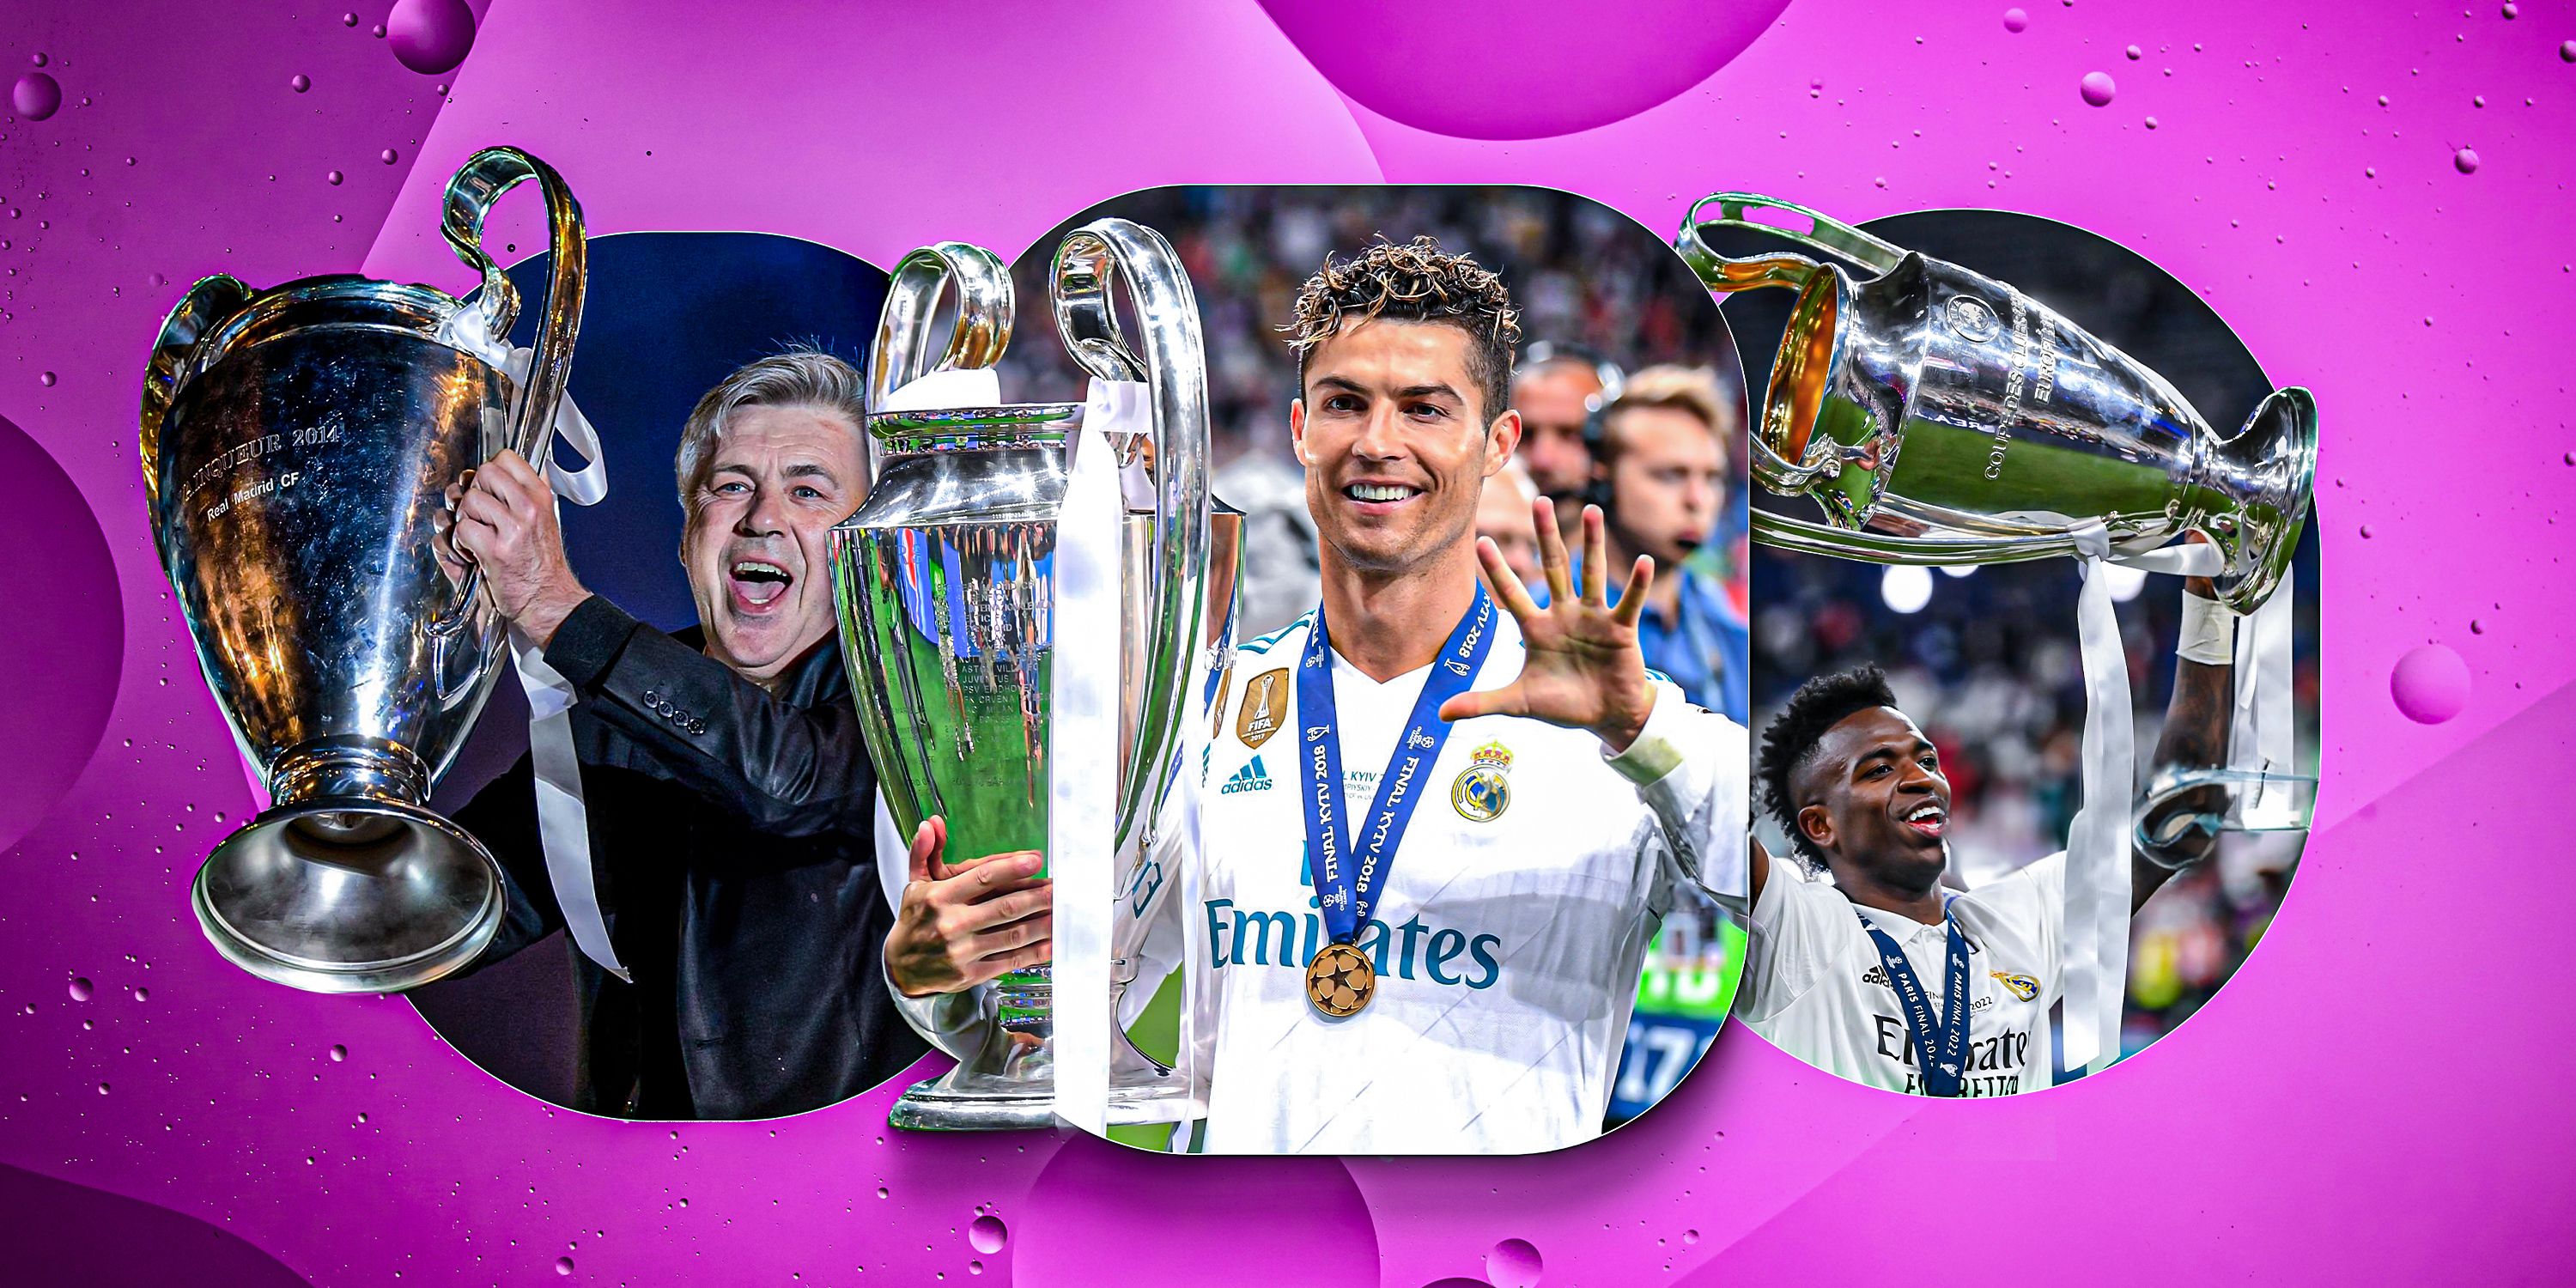 A custom image of Carlo Ancelotti, Cristiano Ronaldo and Vinicius Junior all with the Champions League trophy